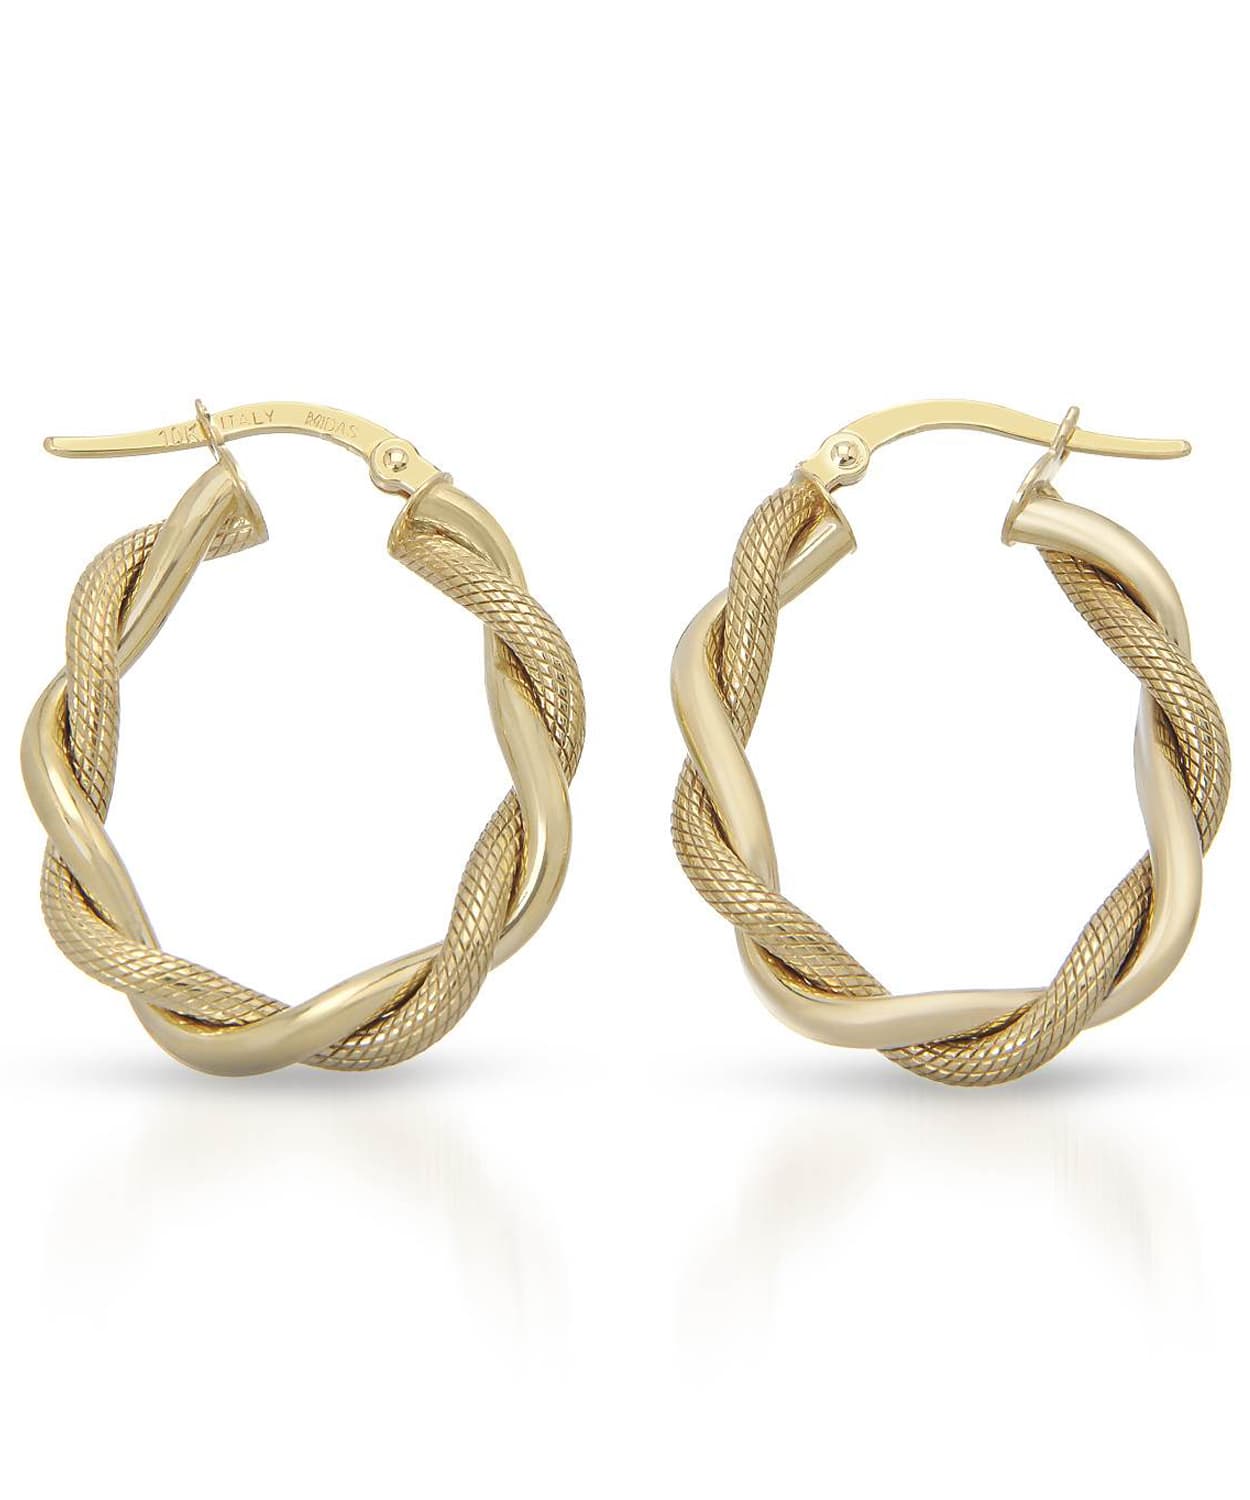 10k Yellow Gold Intertwined Hoop Earrings View 1